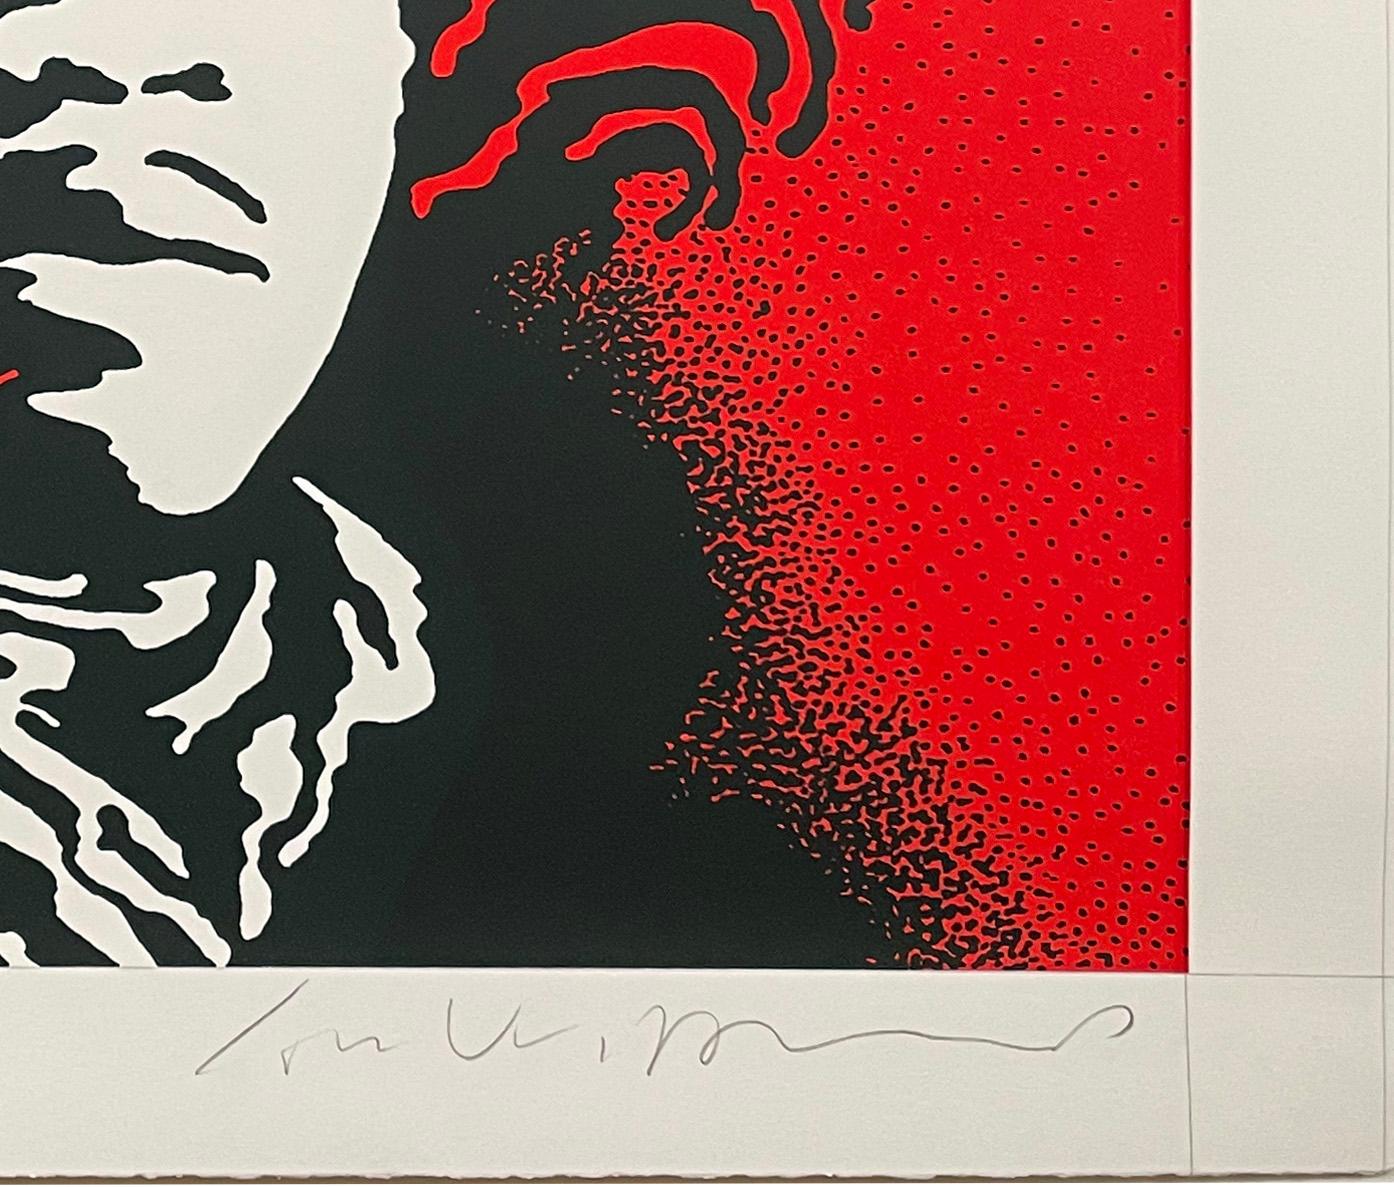 Jimi Hendrix (red), by John Van Hamersveld 2